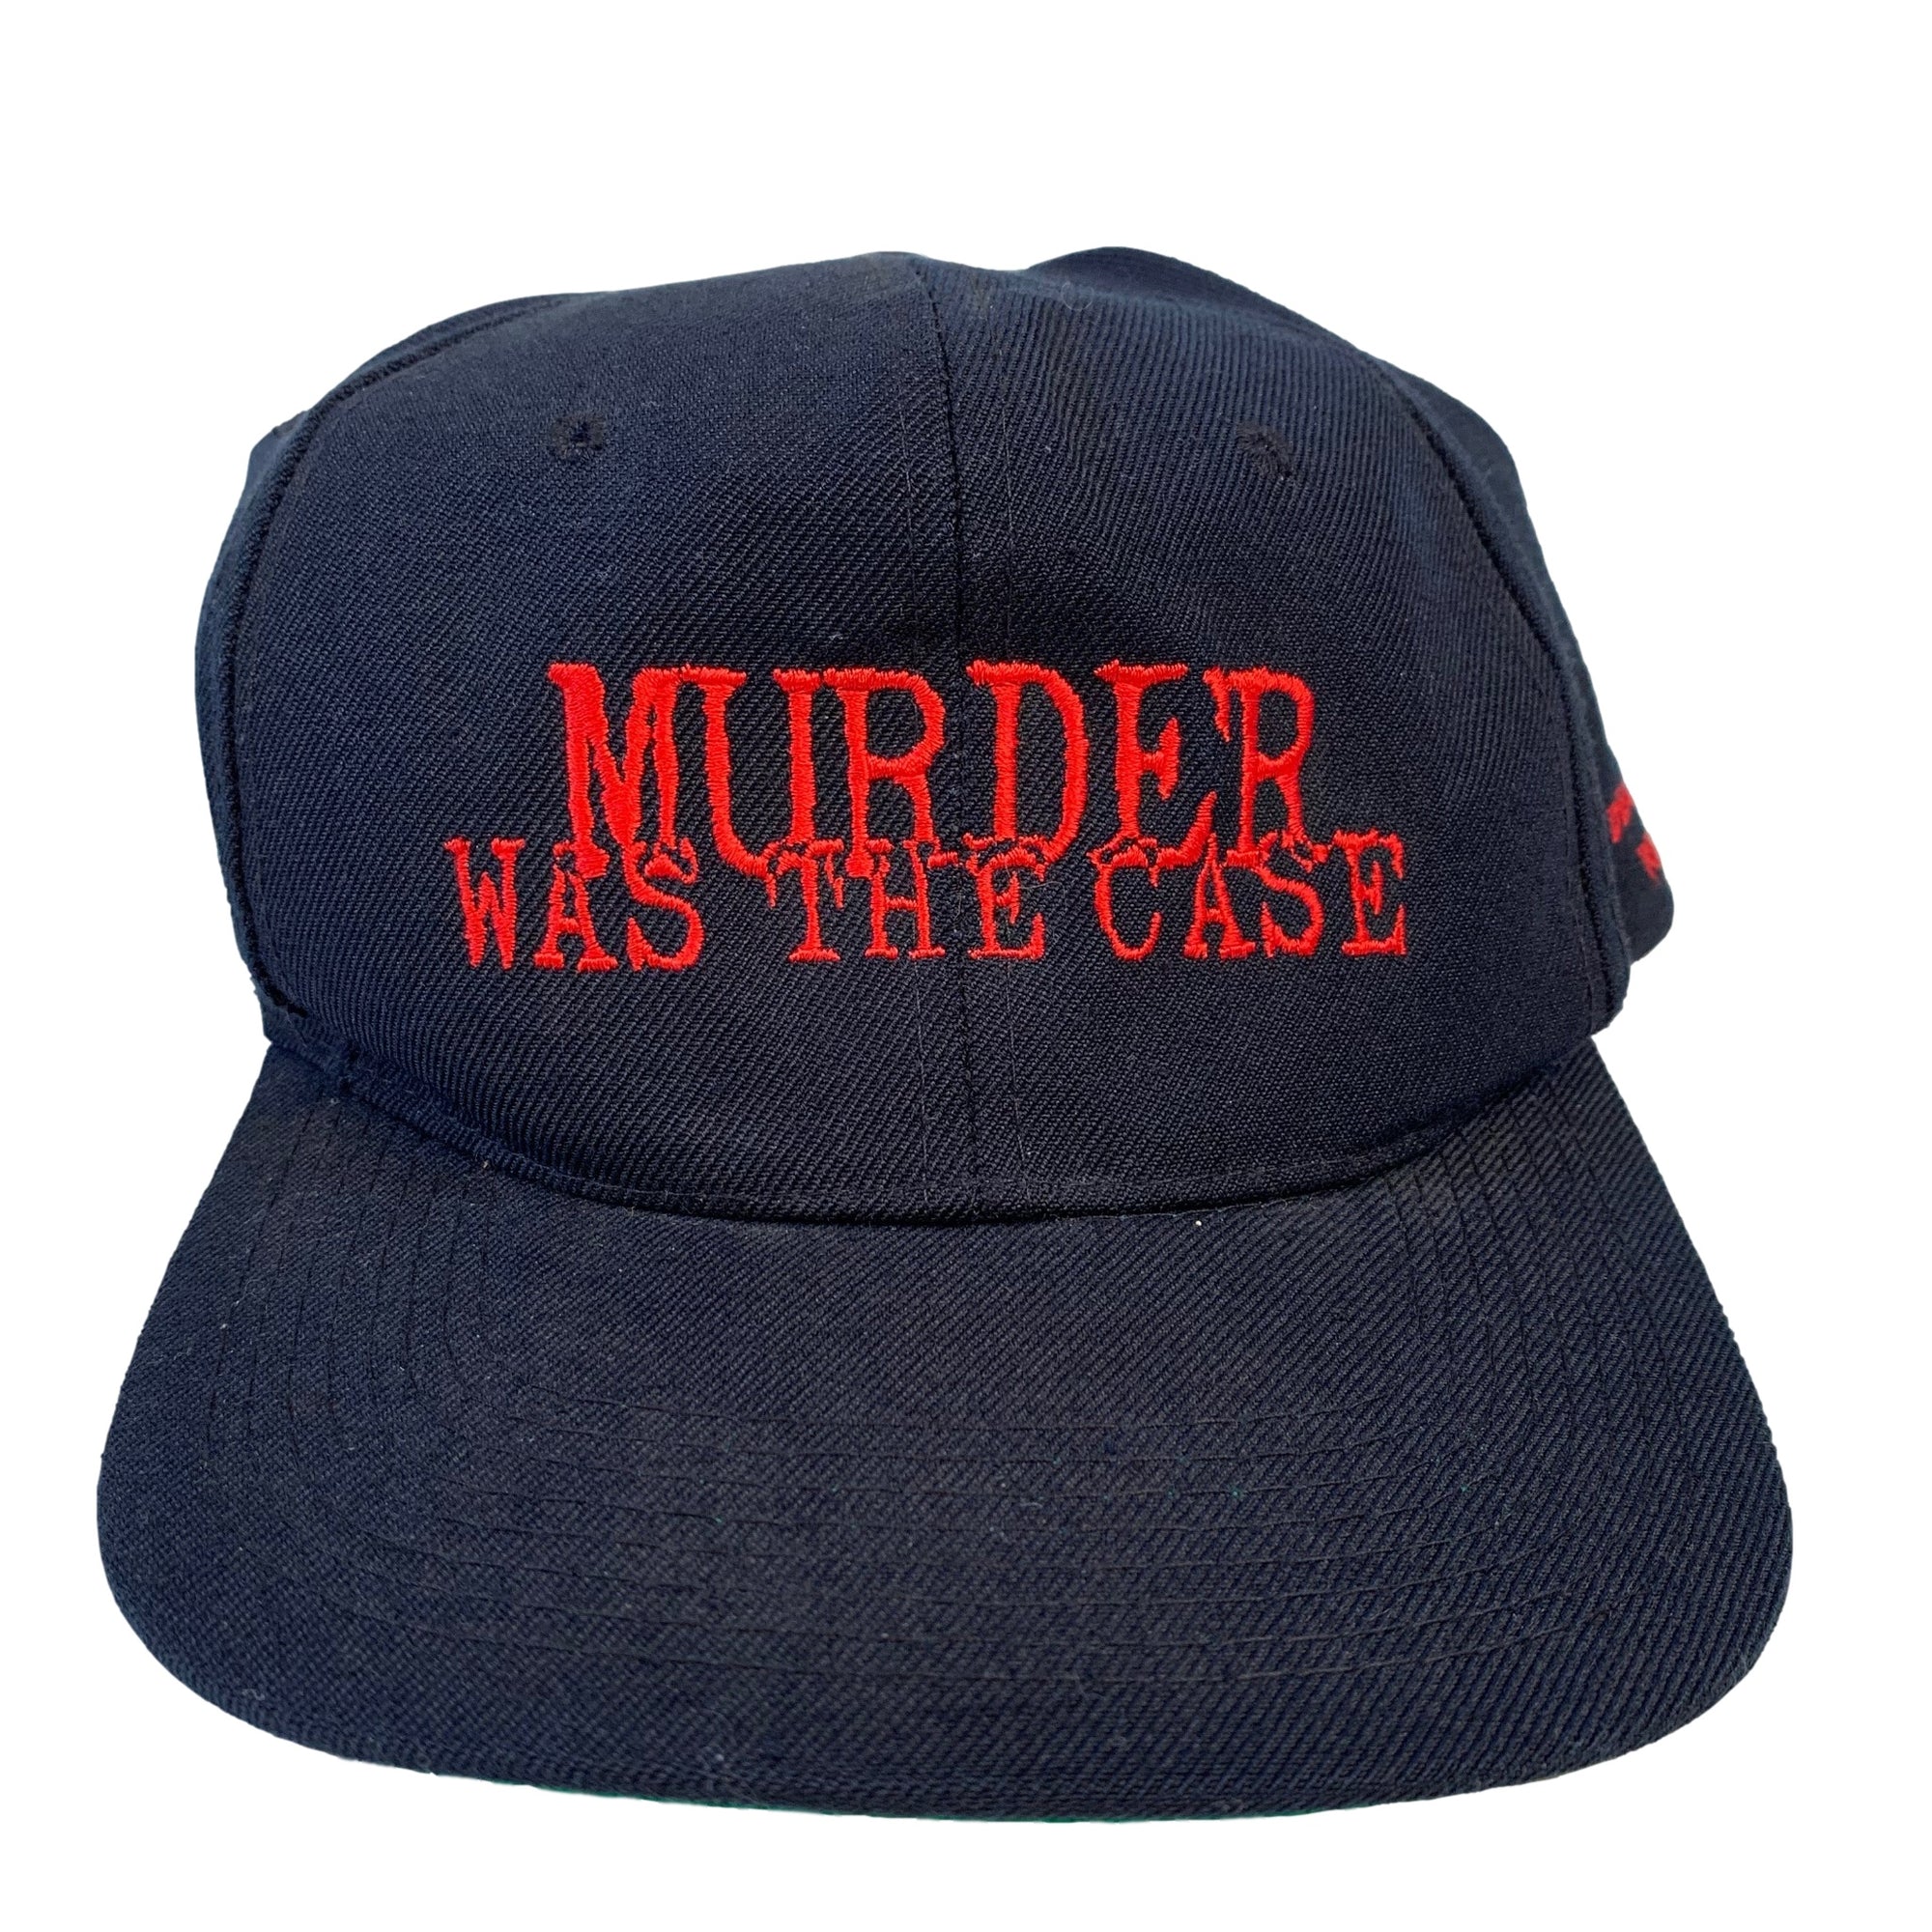 Vintage Snoop Dogg "Murder Was The Case" Snapback - jointcustodydc